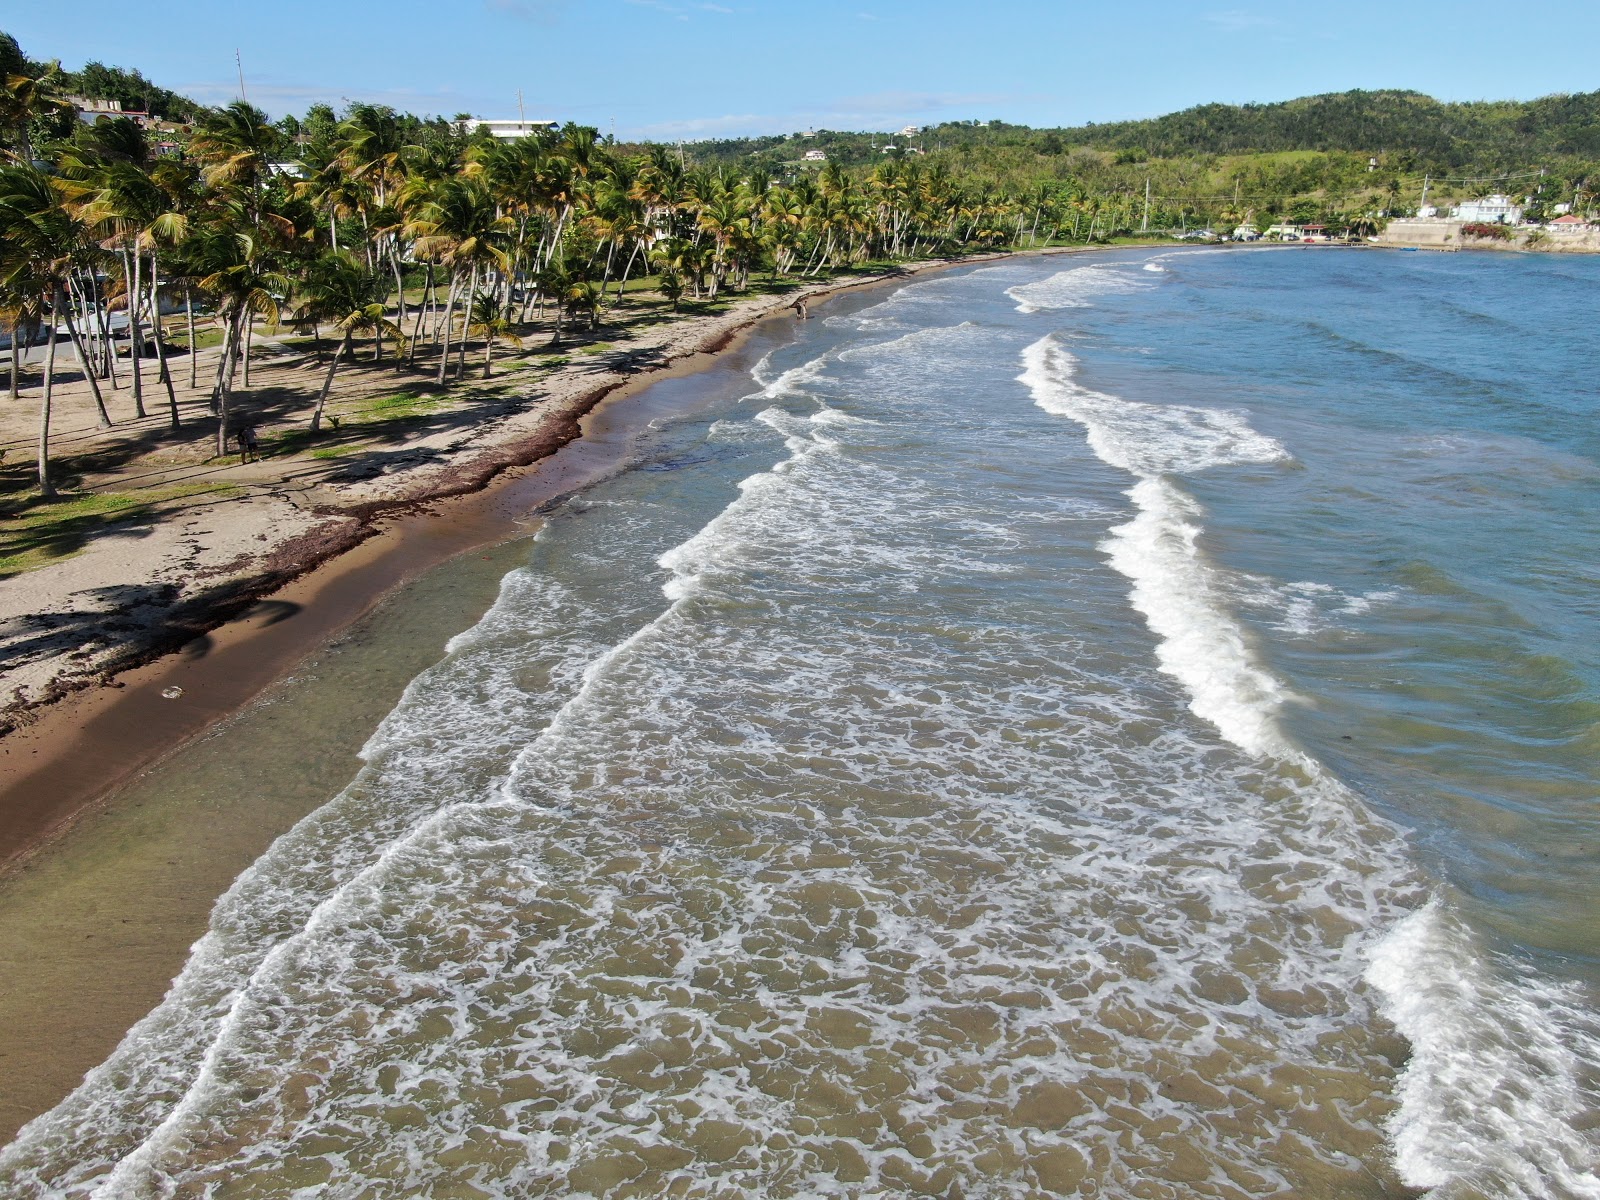 Foto di Playa Guayanes con una superficie del sabbia luminosa